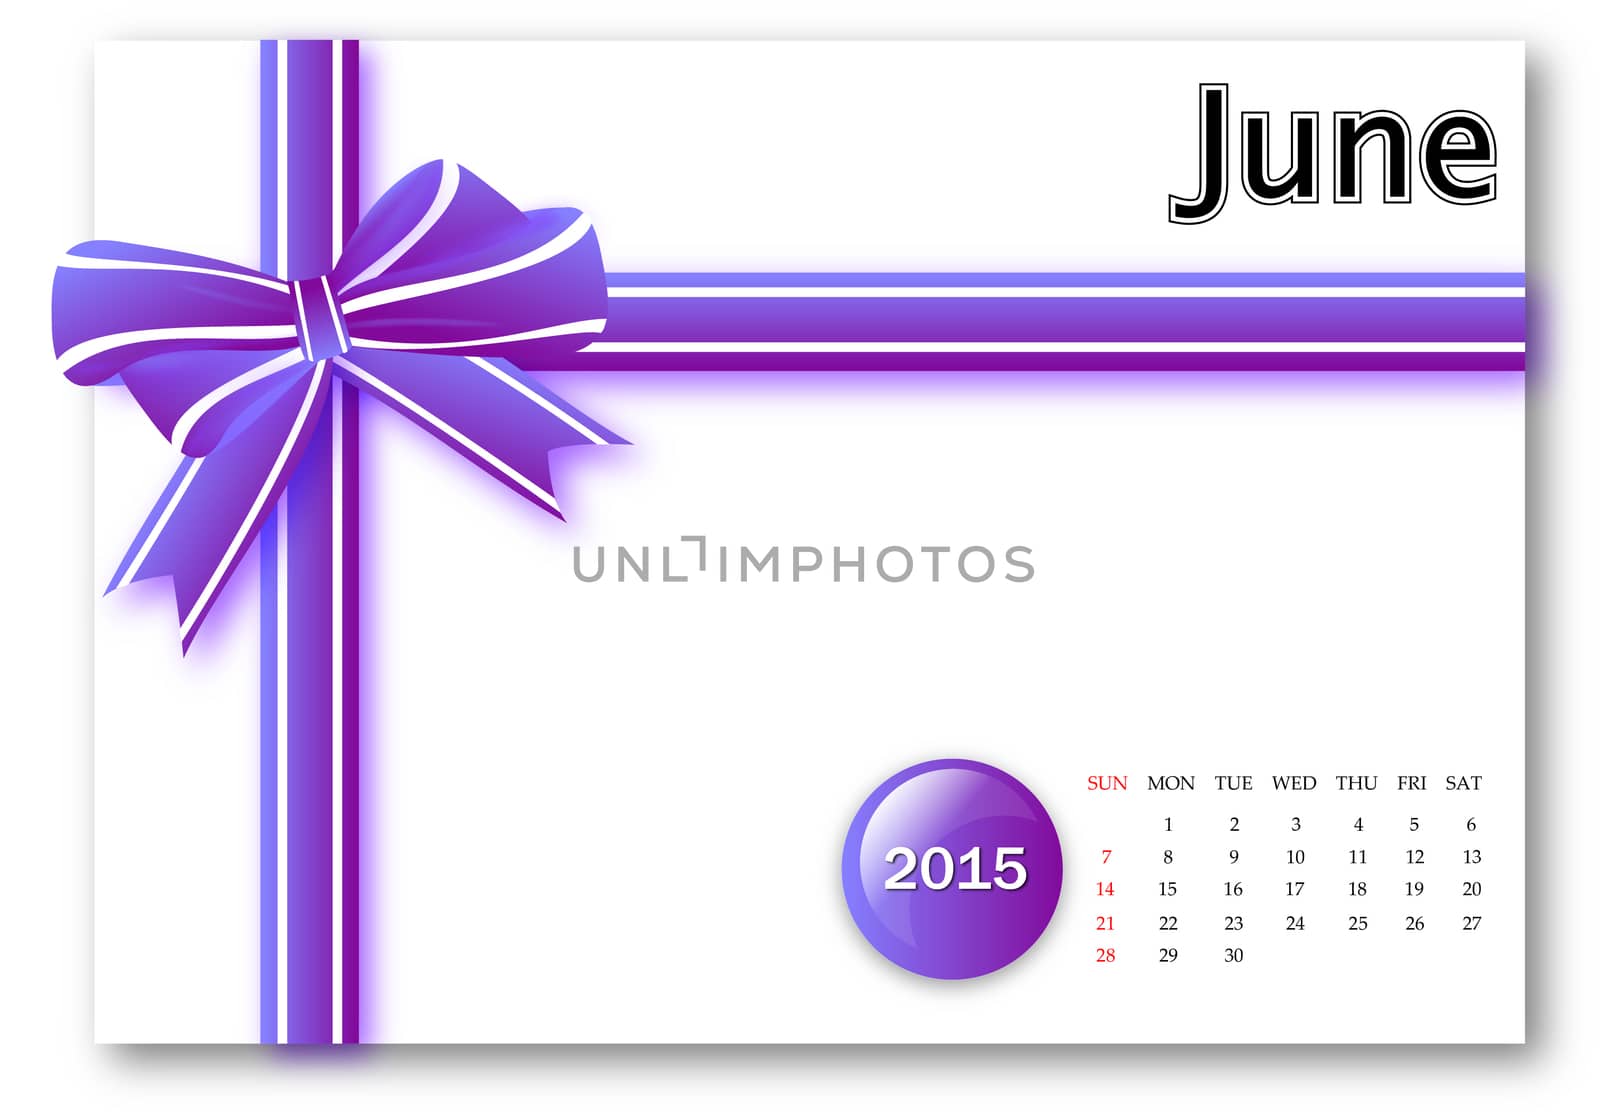 June 2015 - Calendar series with gift ribbon design